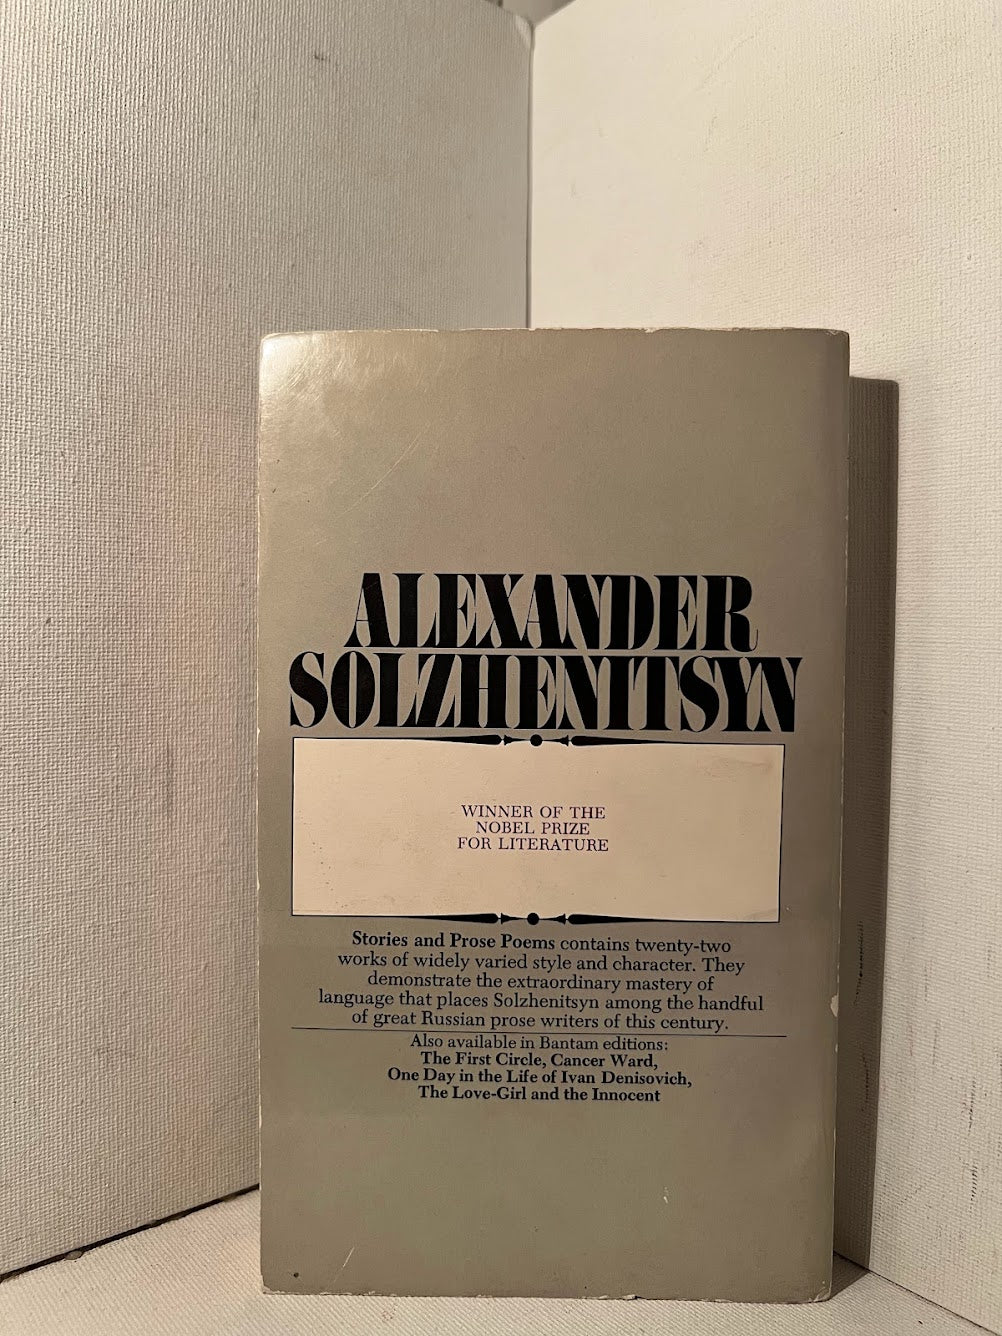 Stories and Prose Poems by Alexander Solzhenitsyn